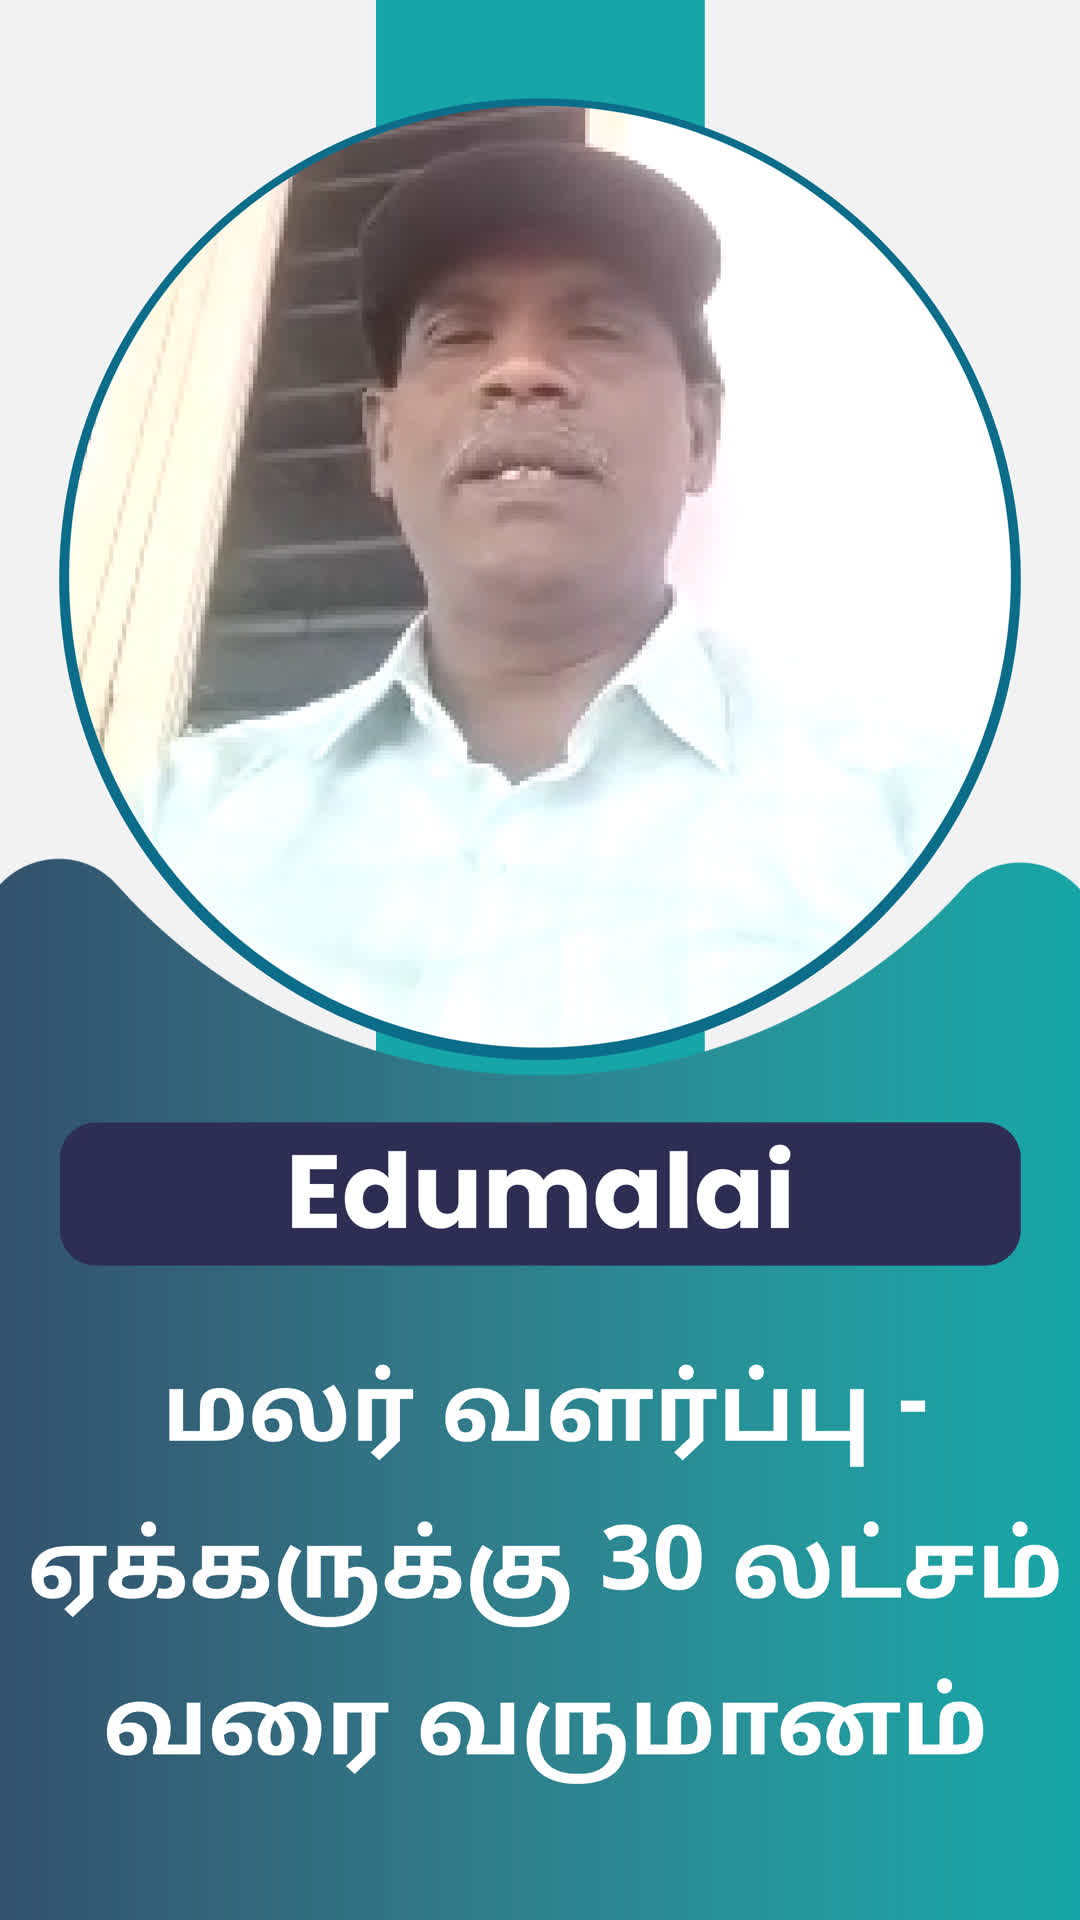 Edumalai's Honest Review of ffreedom app - Coimbatore ,Tamil Nadu